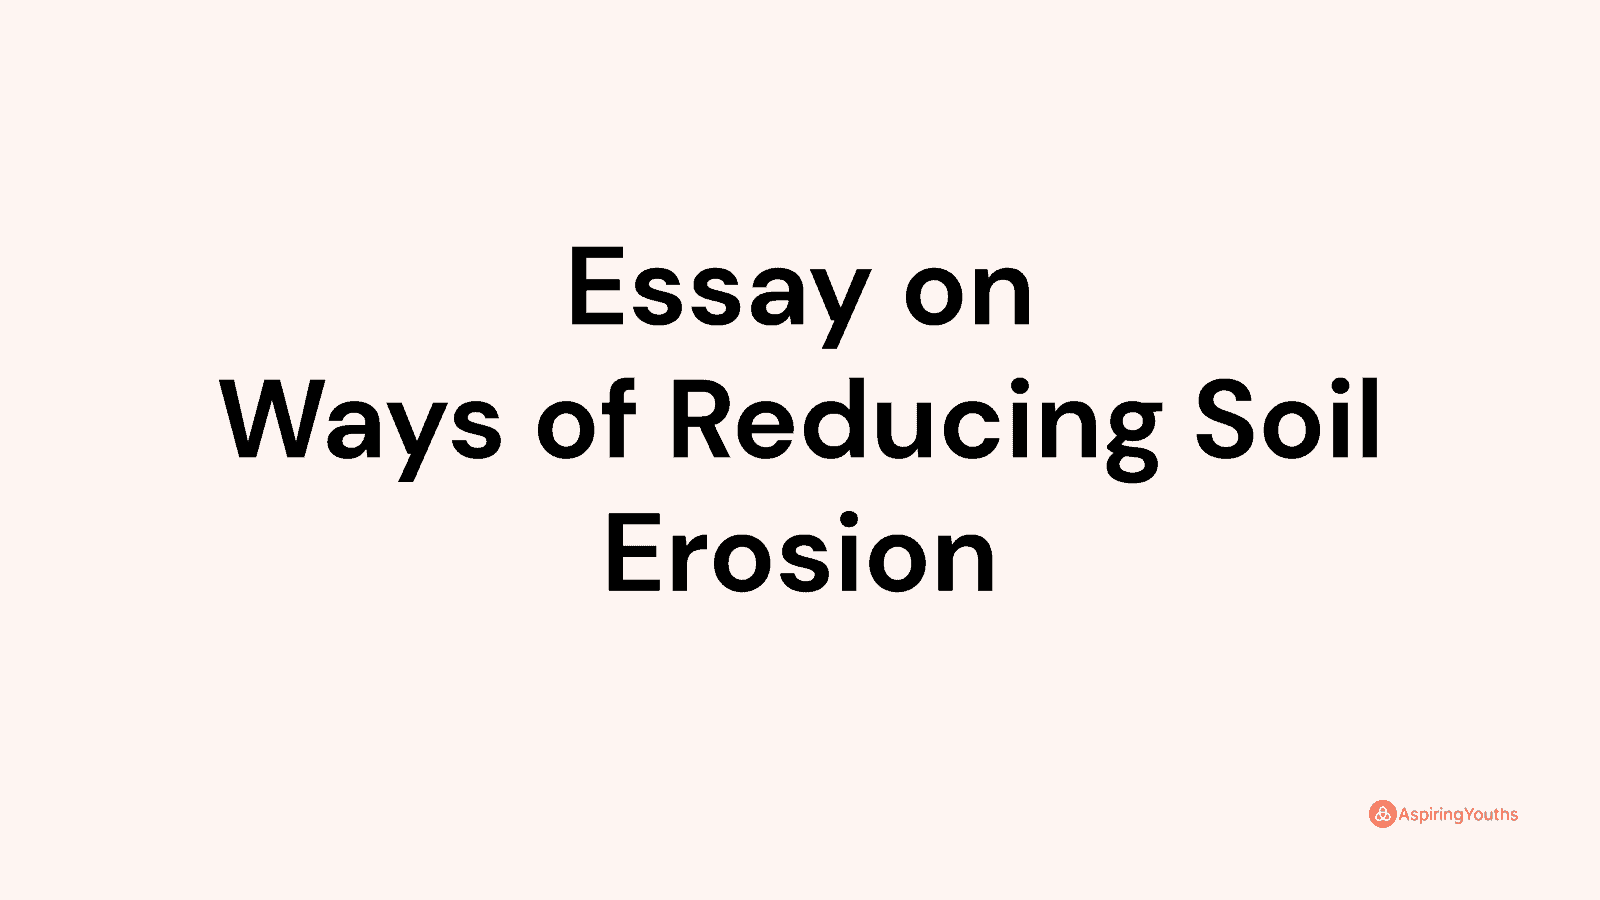 Essay on Ways of Reducing Soil Erosion